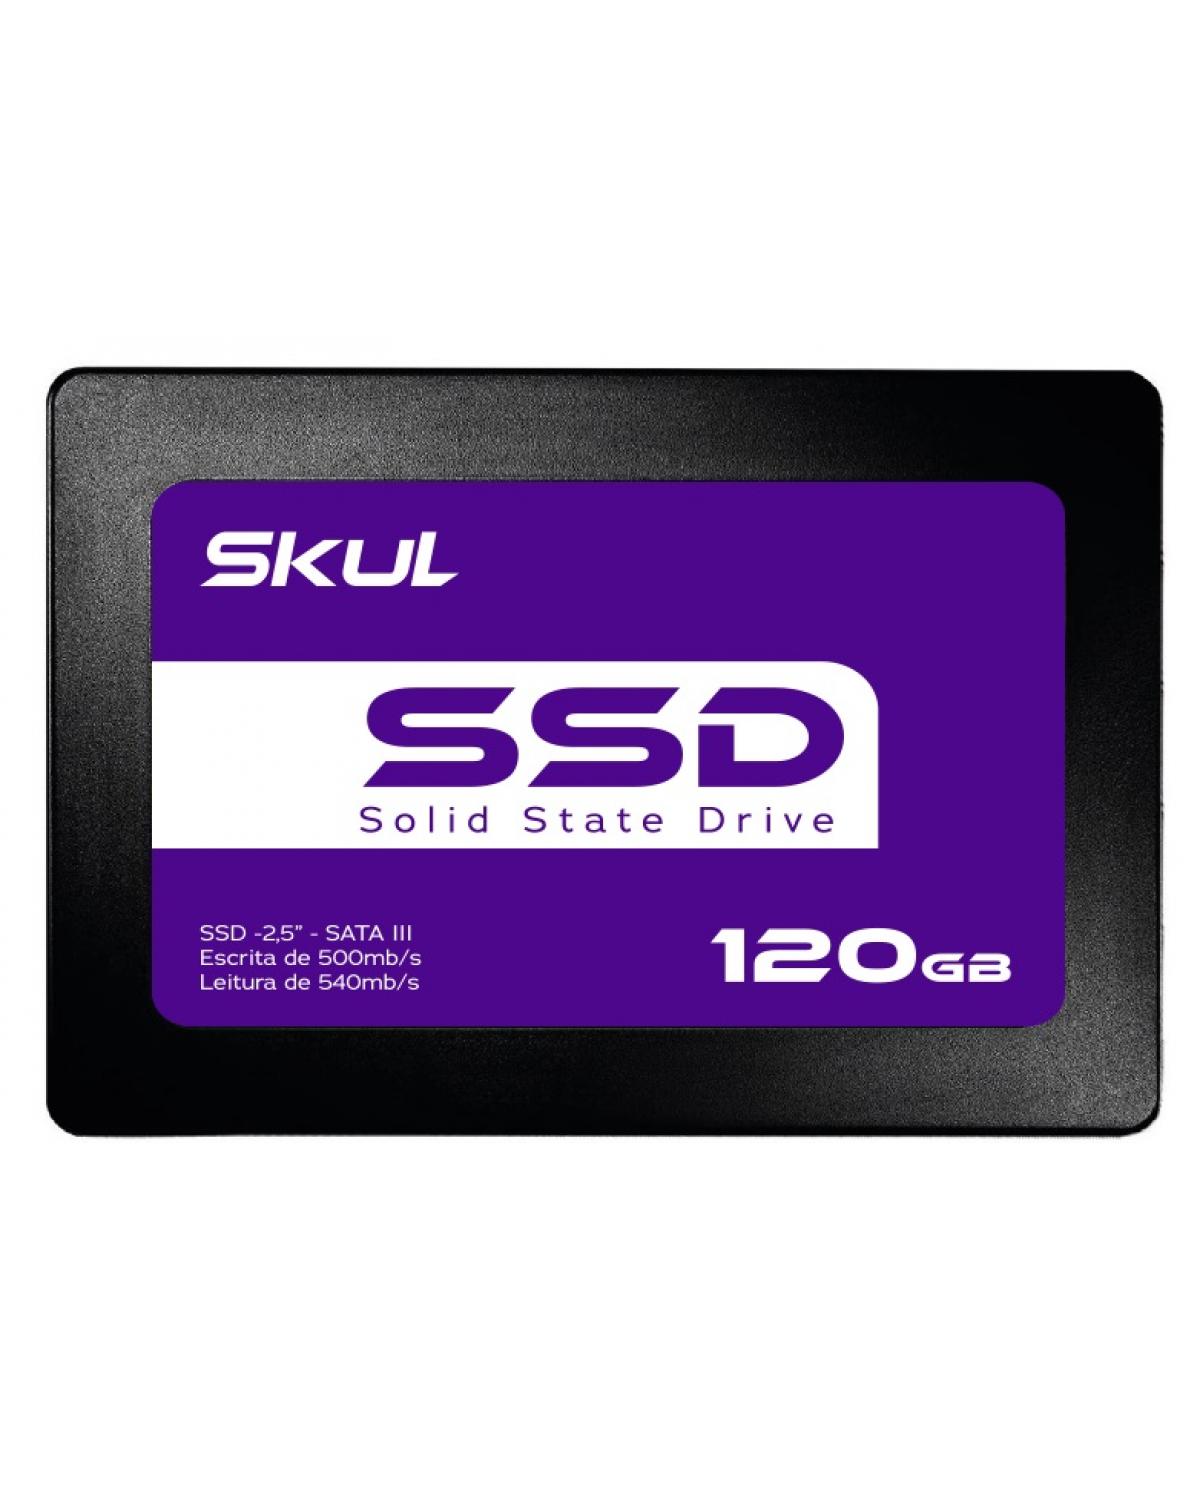 SSD 2.5 120GB SATA III SKUL LEIT 540MBPS / ESCRITA 500MBPS SD120SK